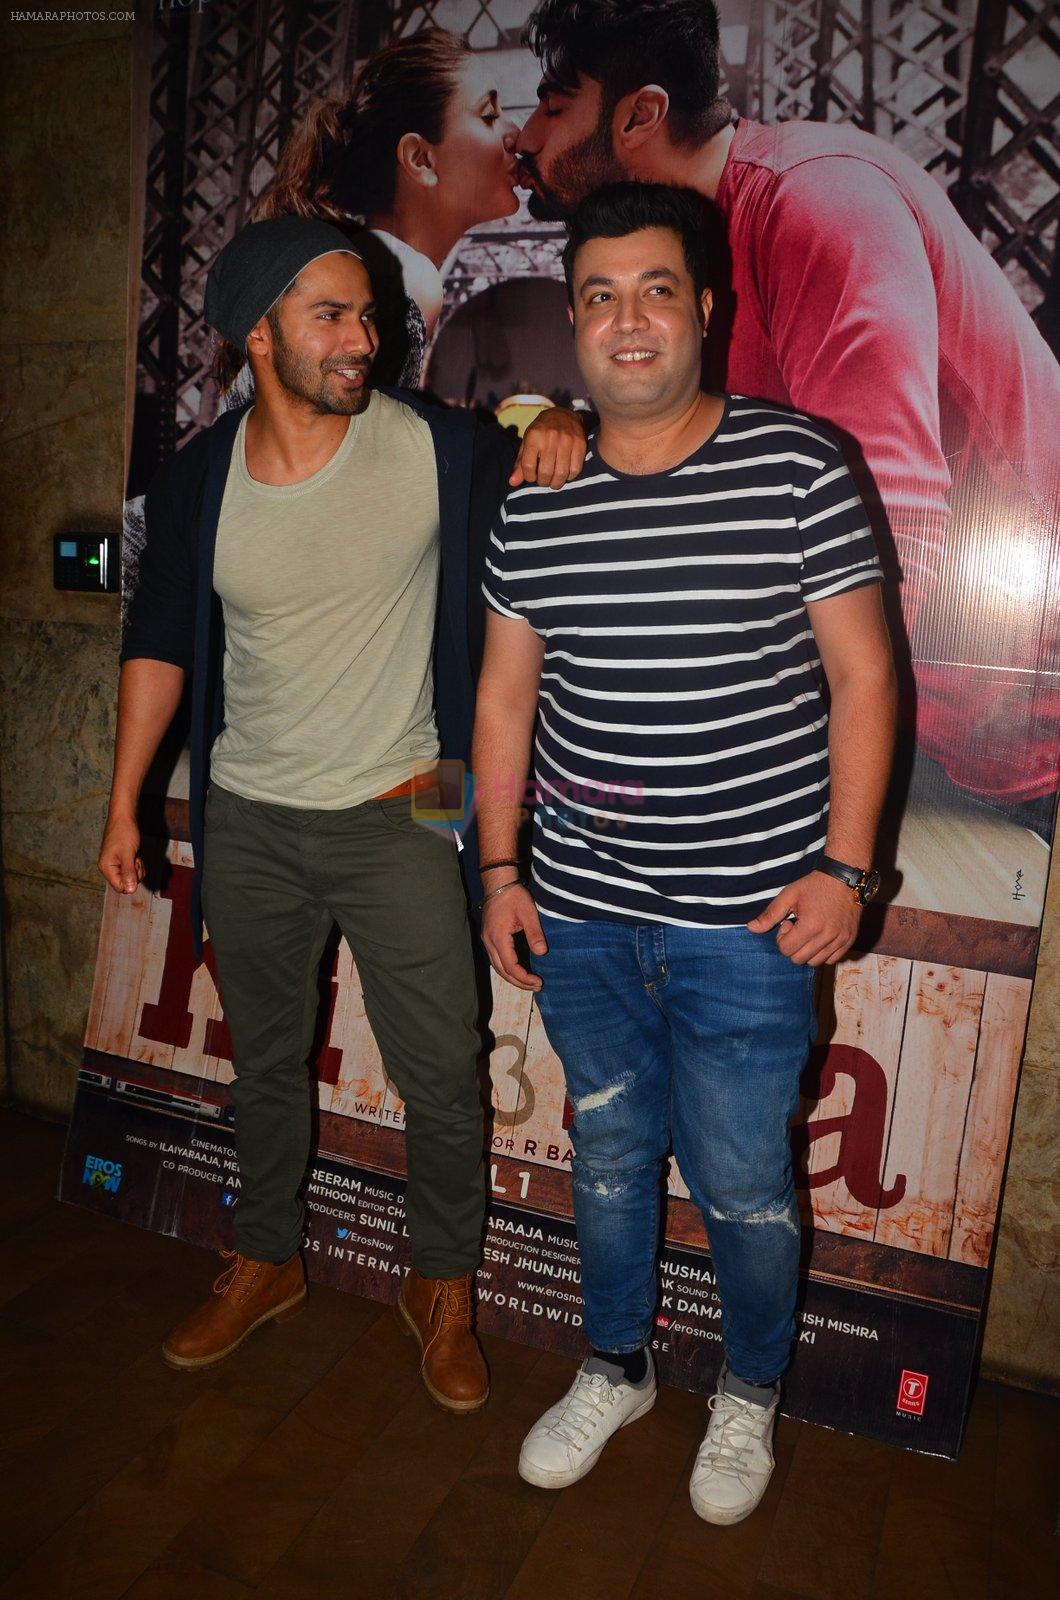 Varun Sharma, Varun Dhawan at ki and ka screening in Mumbai on 26th March 2016